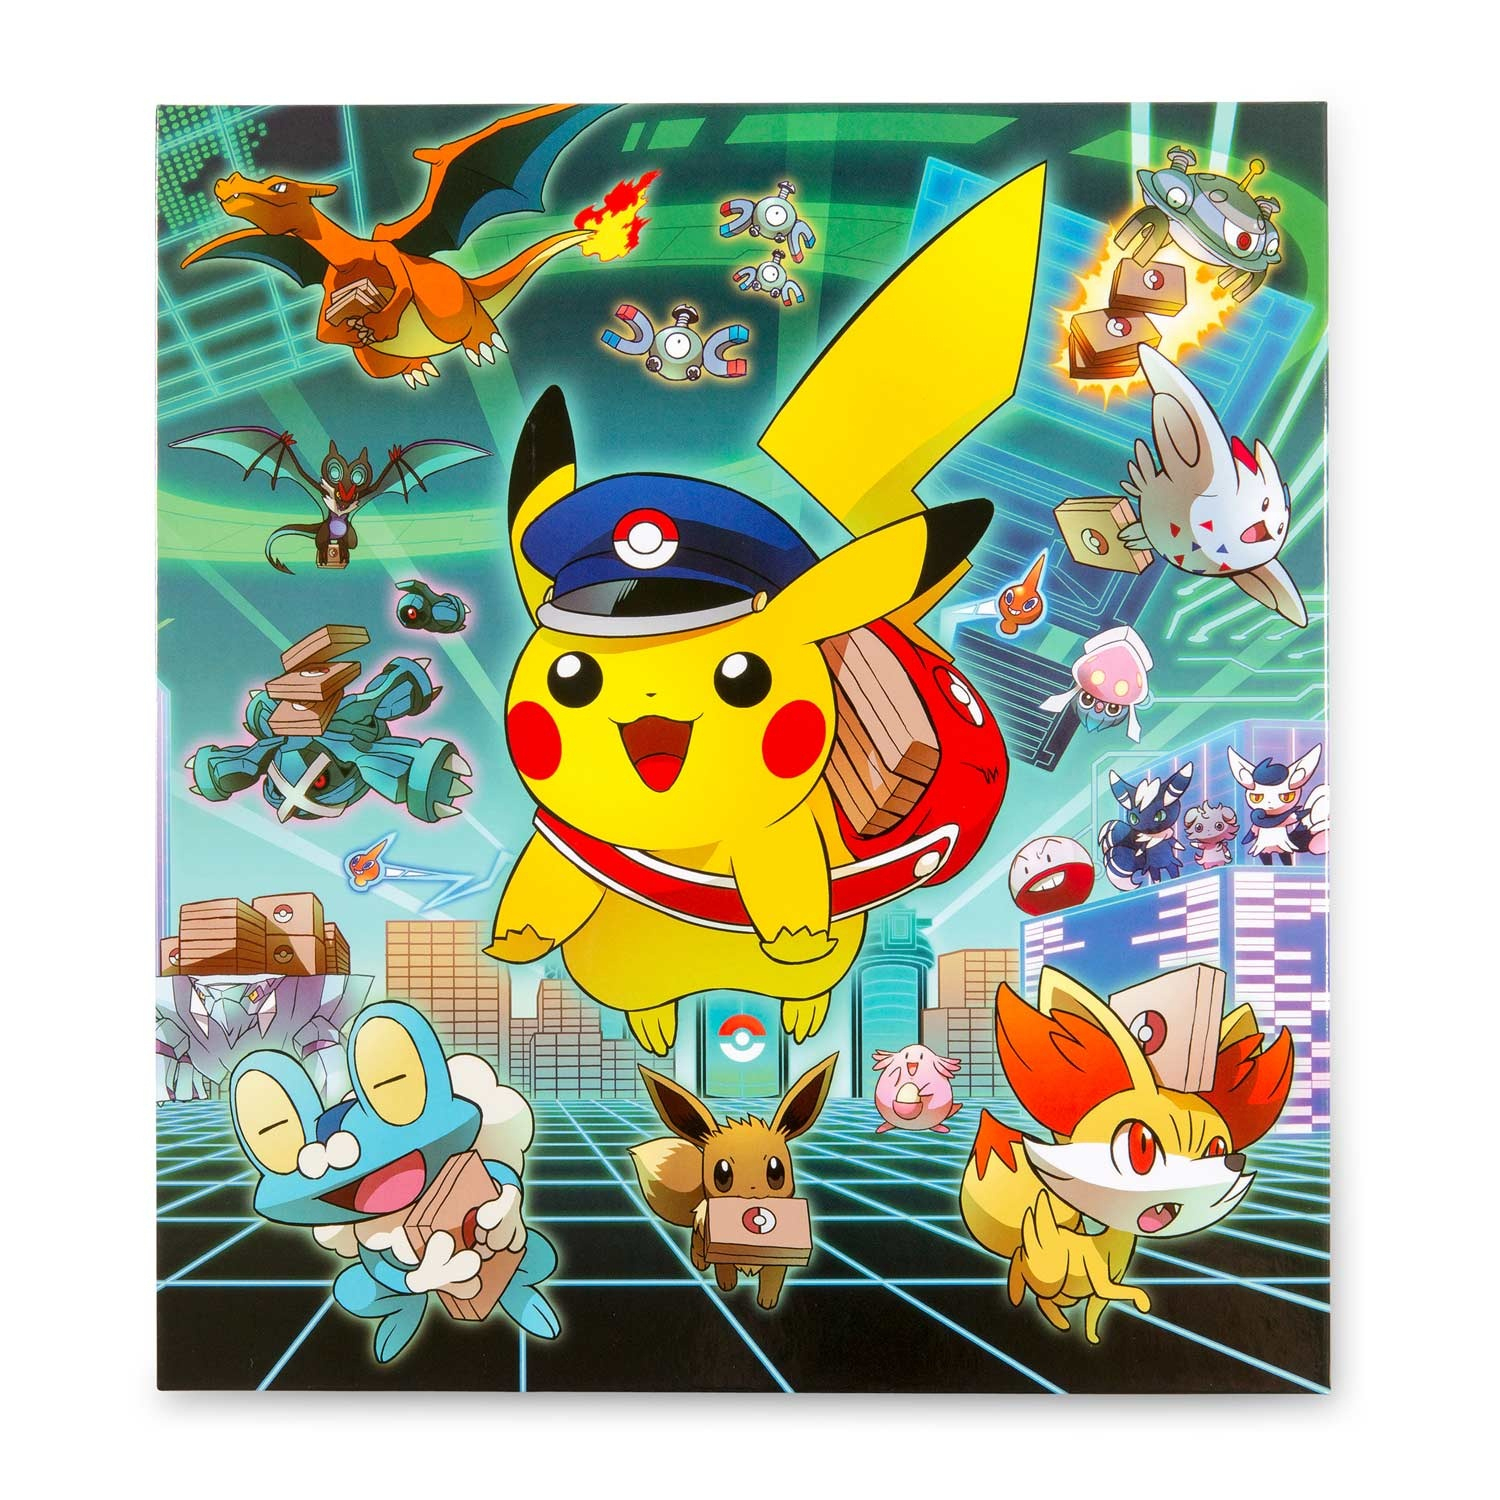 Pokemon Binder Cover Printable - Free Printable Pokemon Binder Cover